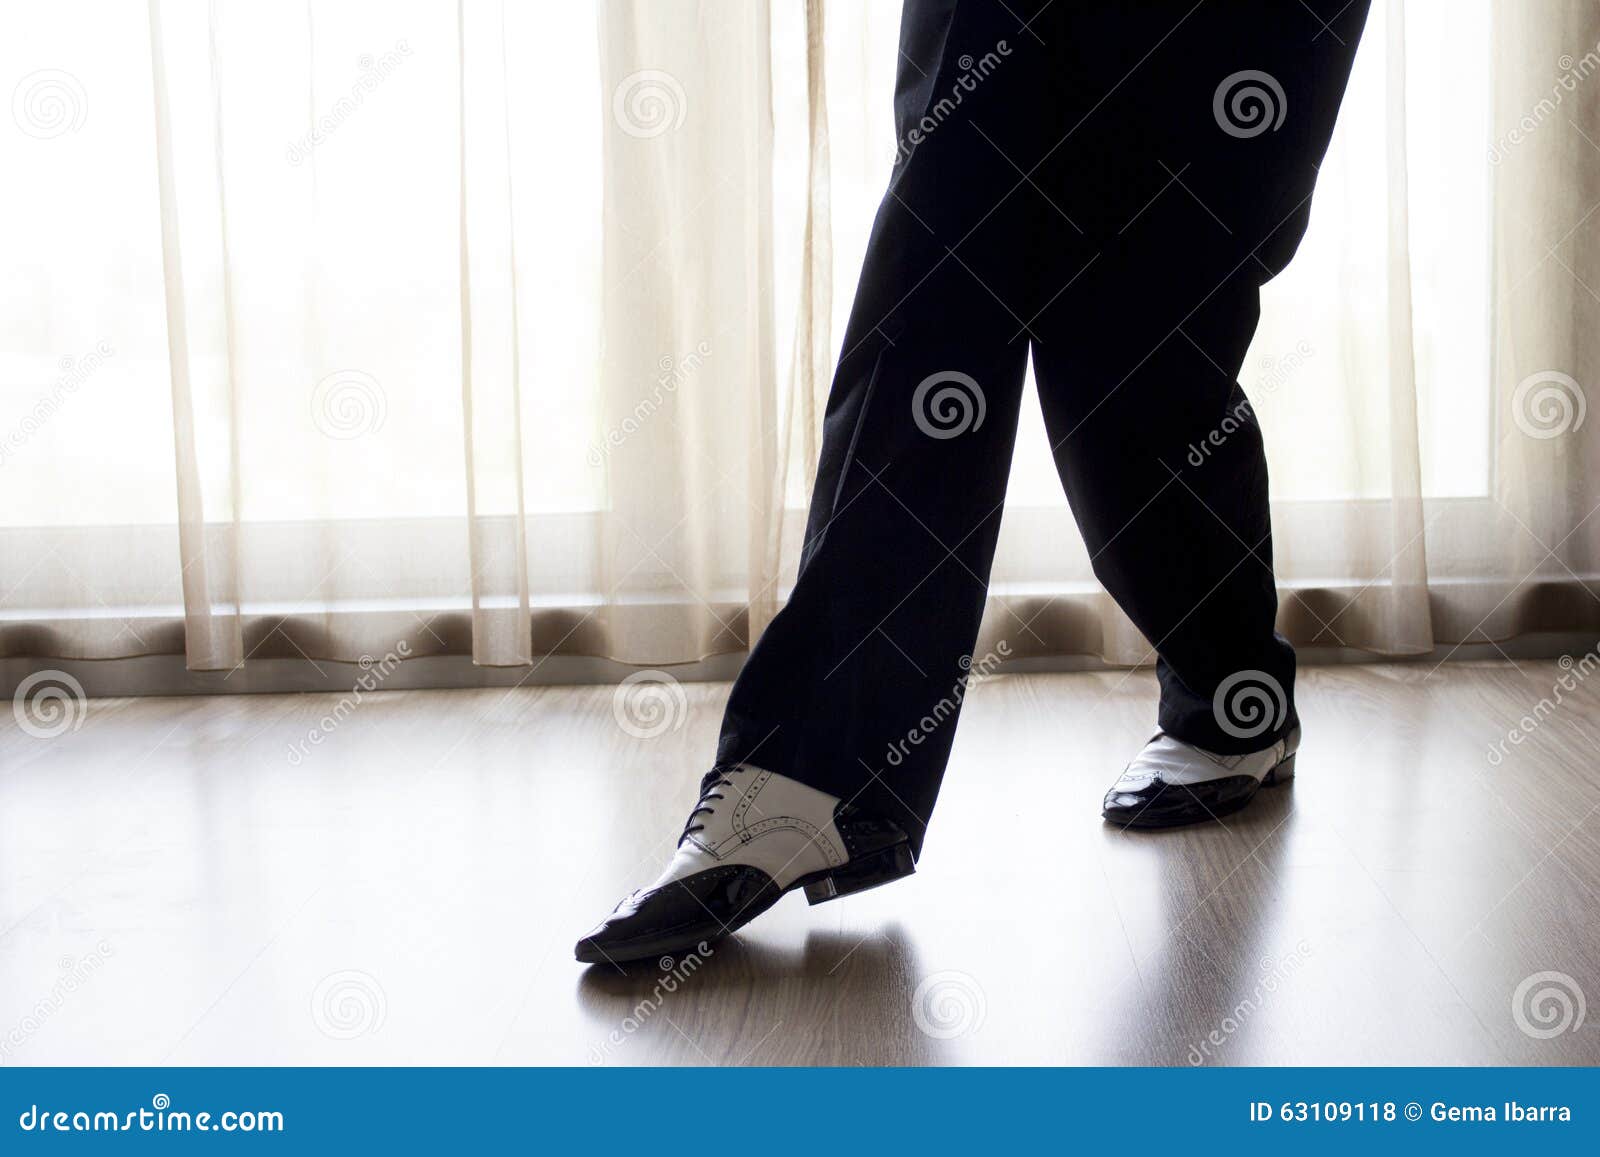 Man dancing feet. stock photo. Image of music, arts, salsa - 63109118